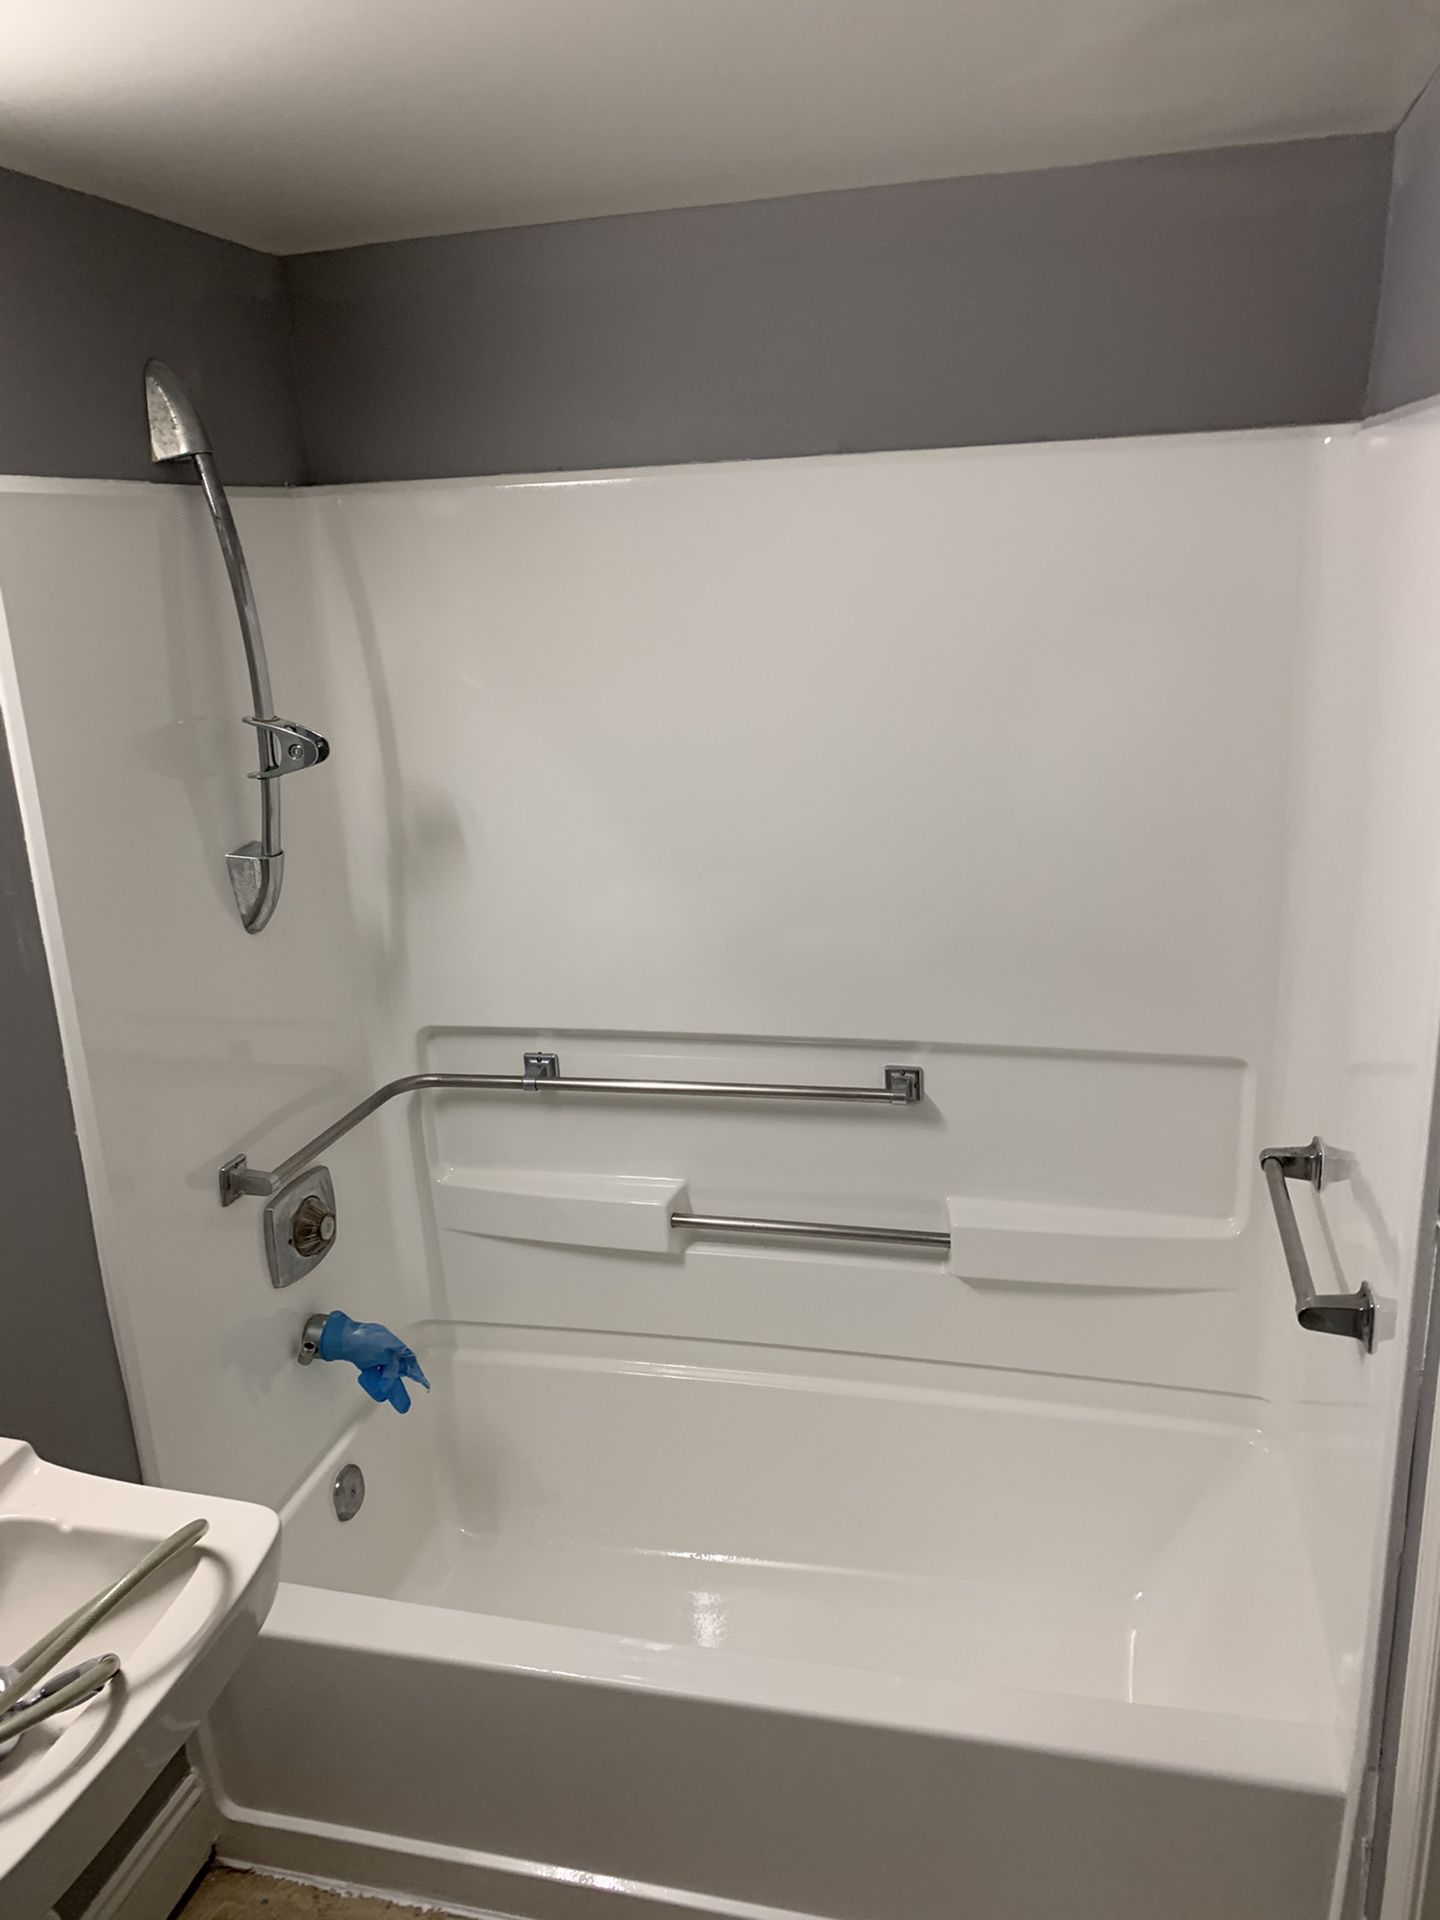 Refinish tubs tile walls kit Cotop vanity’s sink bath floor